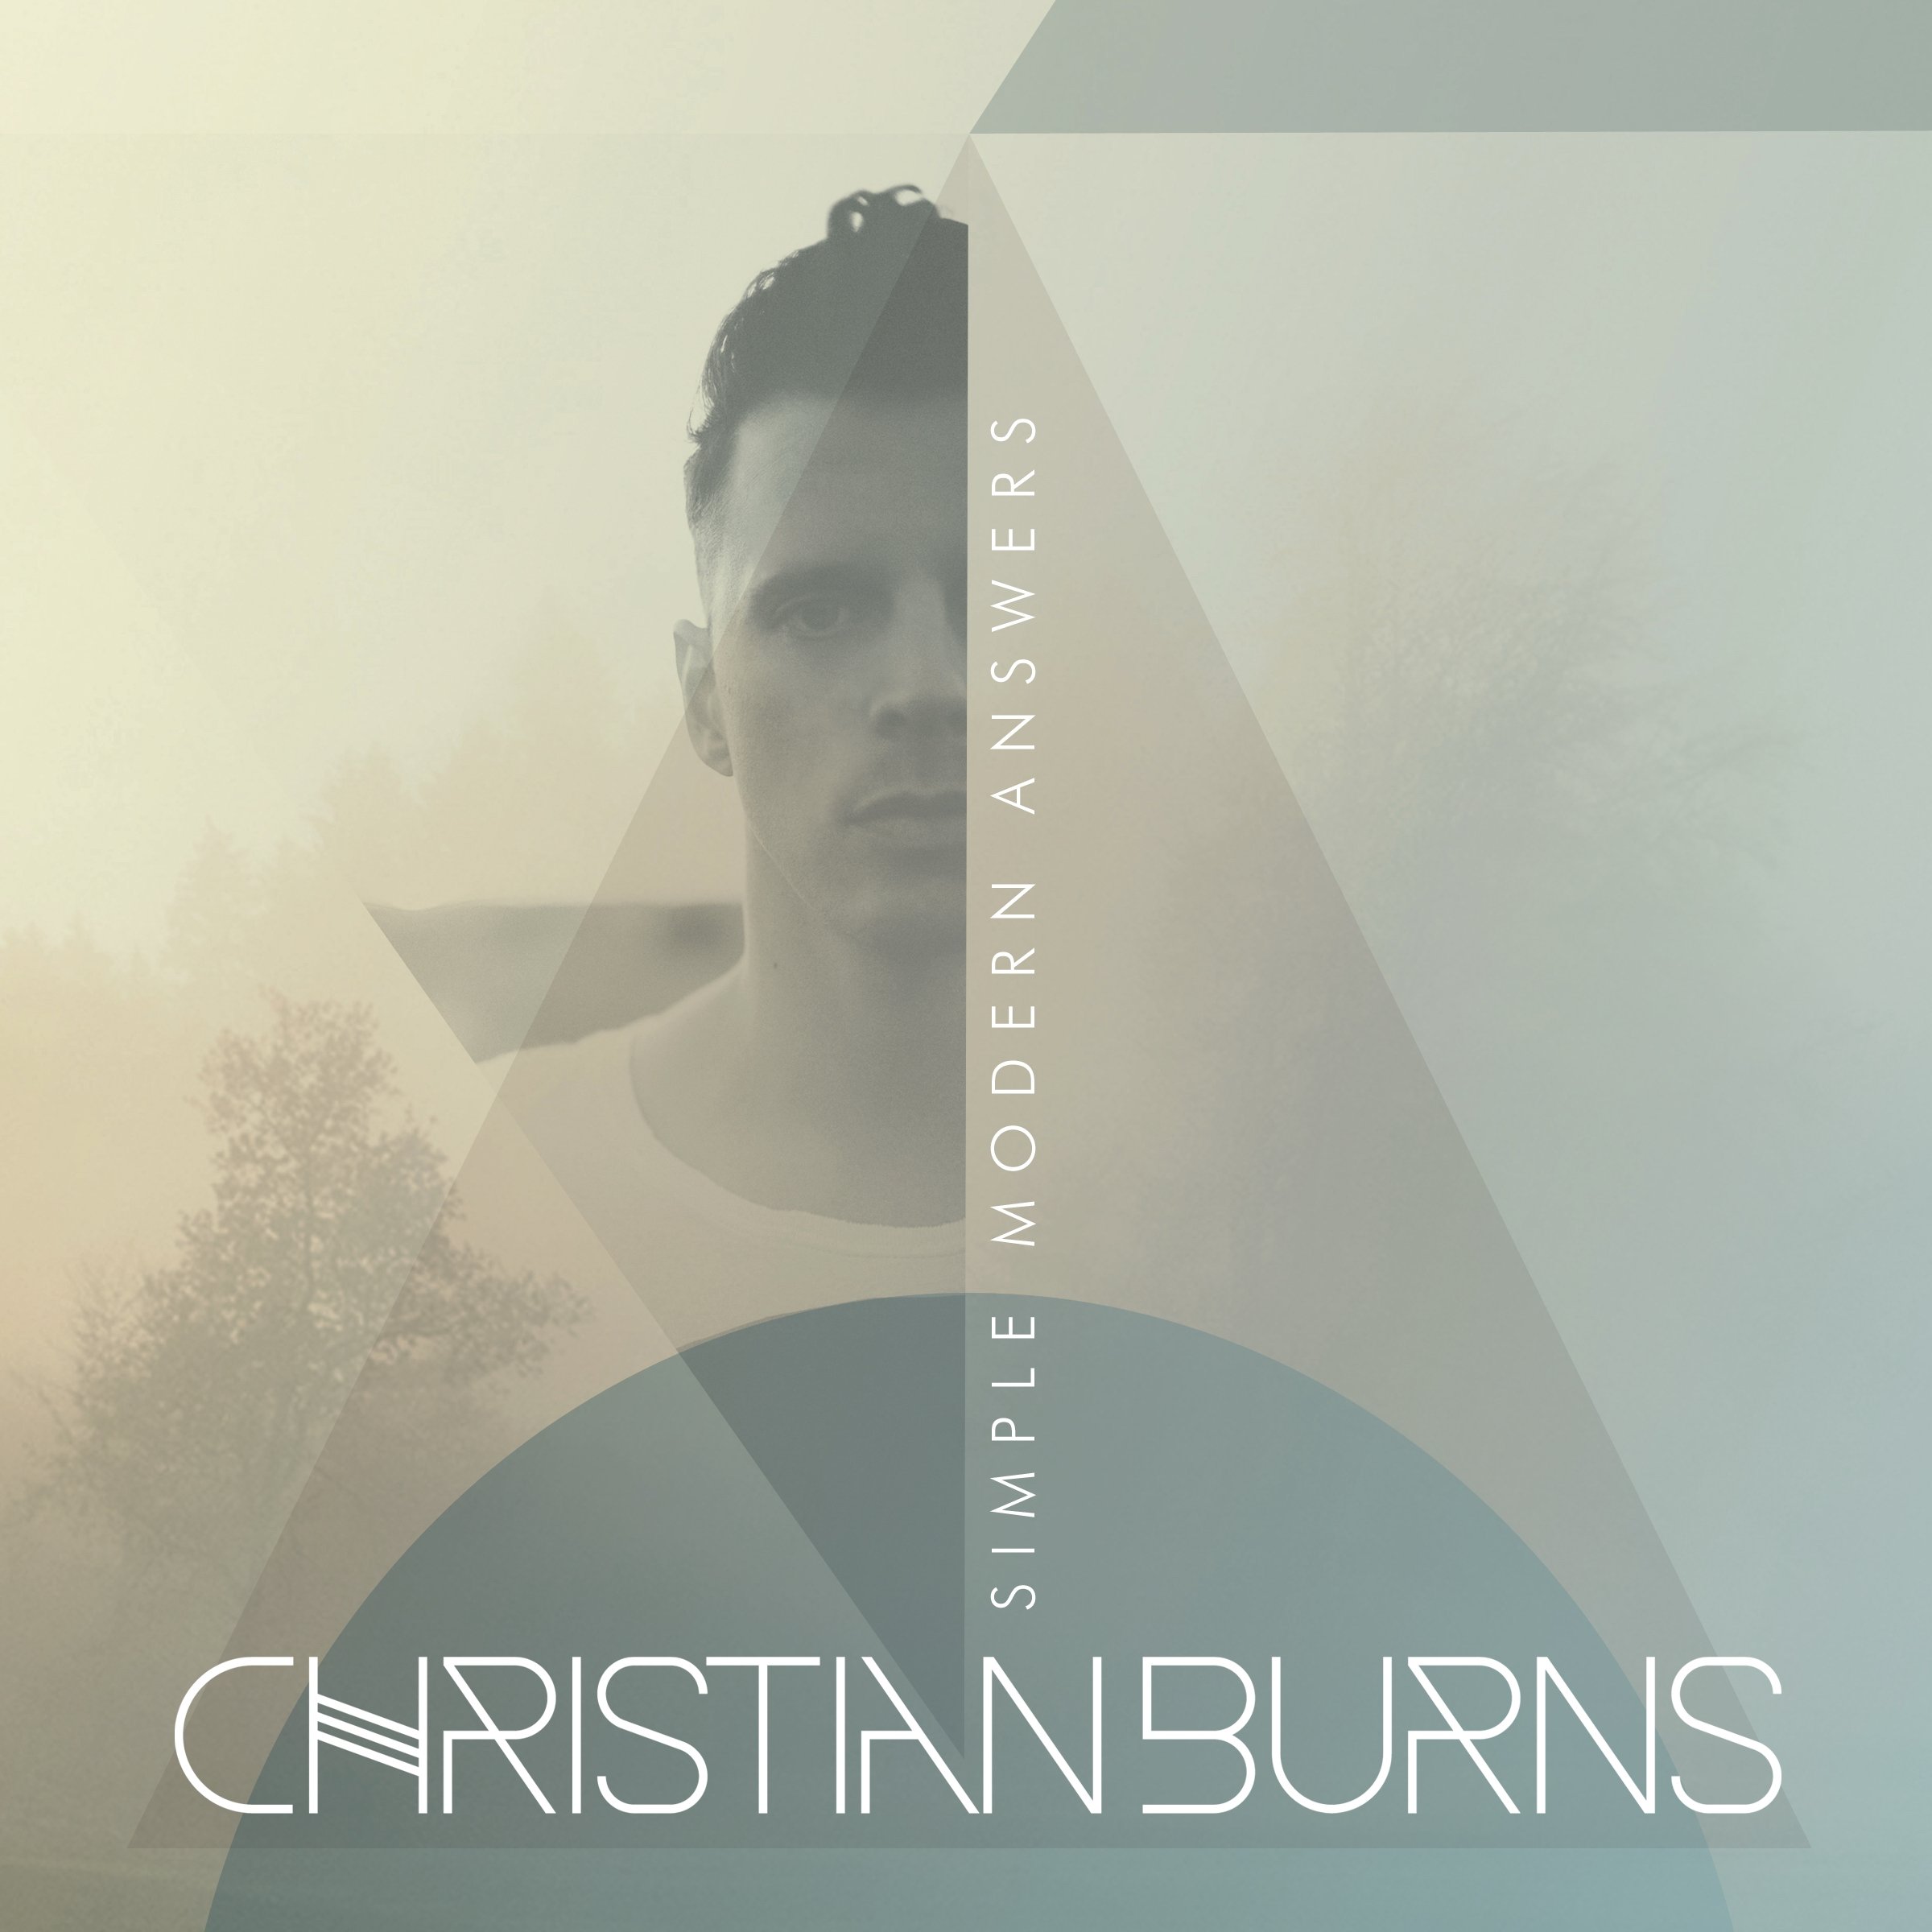 Buuren between us. Кристиан Burns. Christian Burns simple Modern answers. Chicane & Ferry Corsten – one Thousand Suns. Knife games Christian Burns.